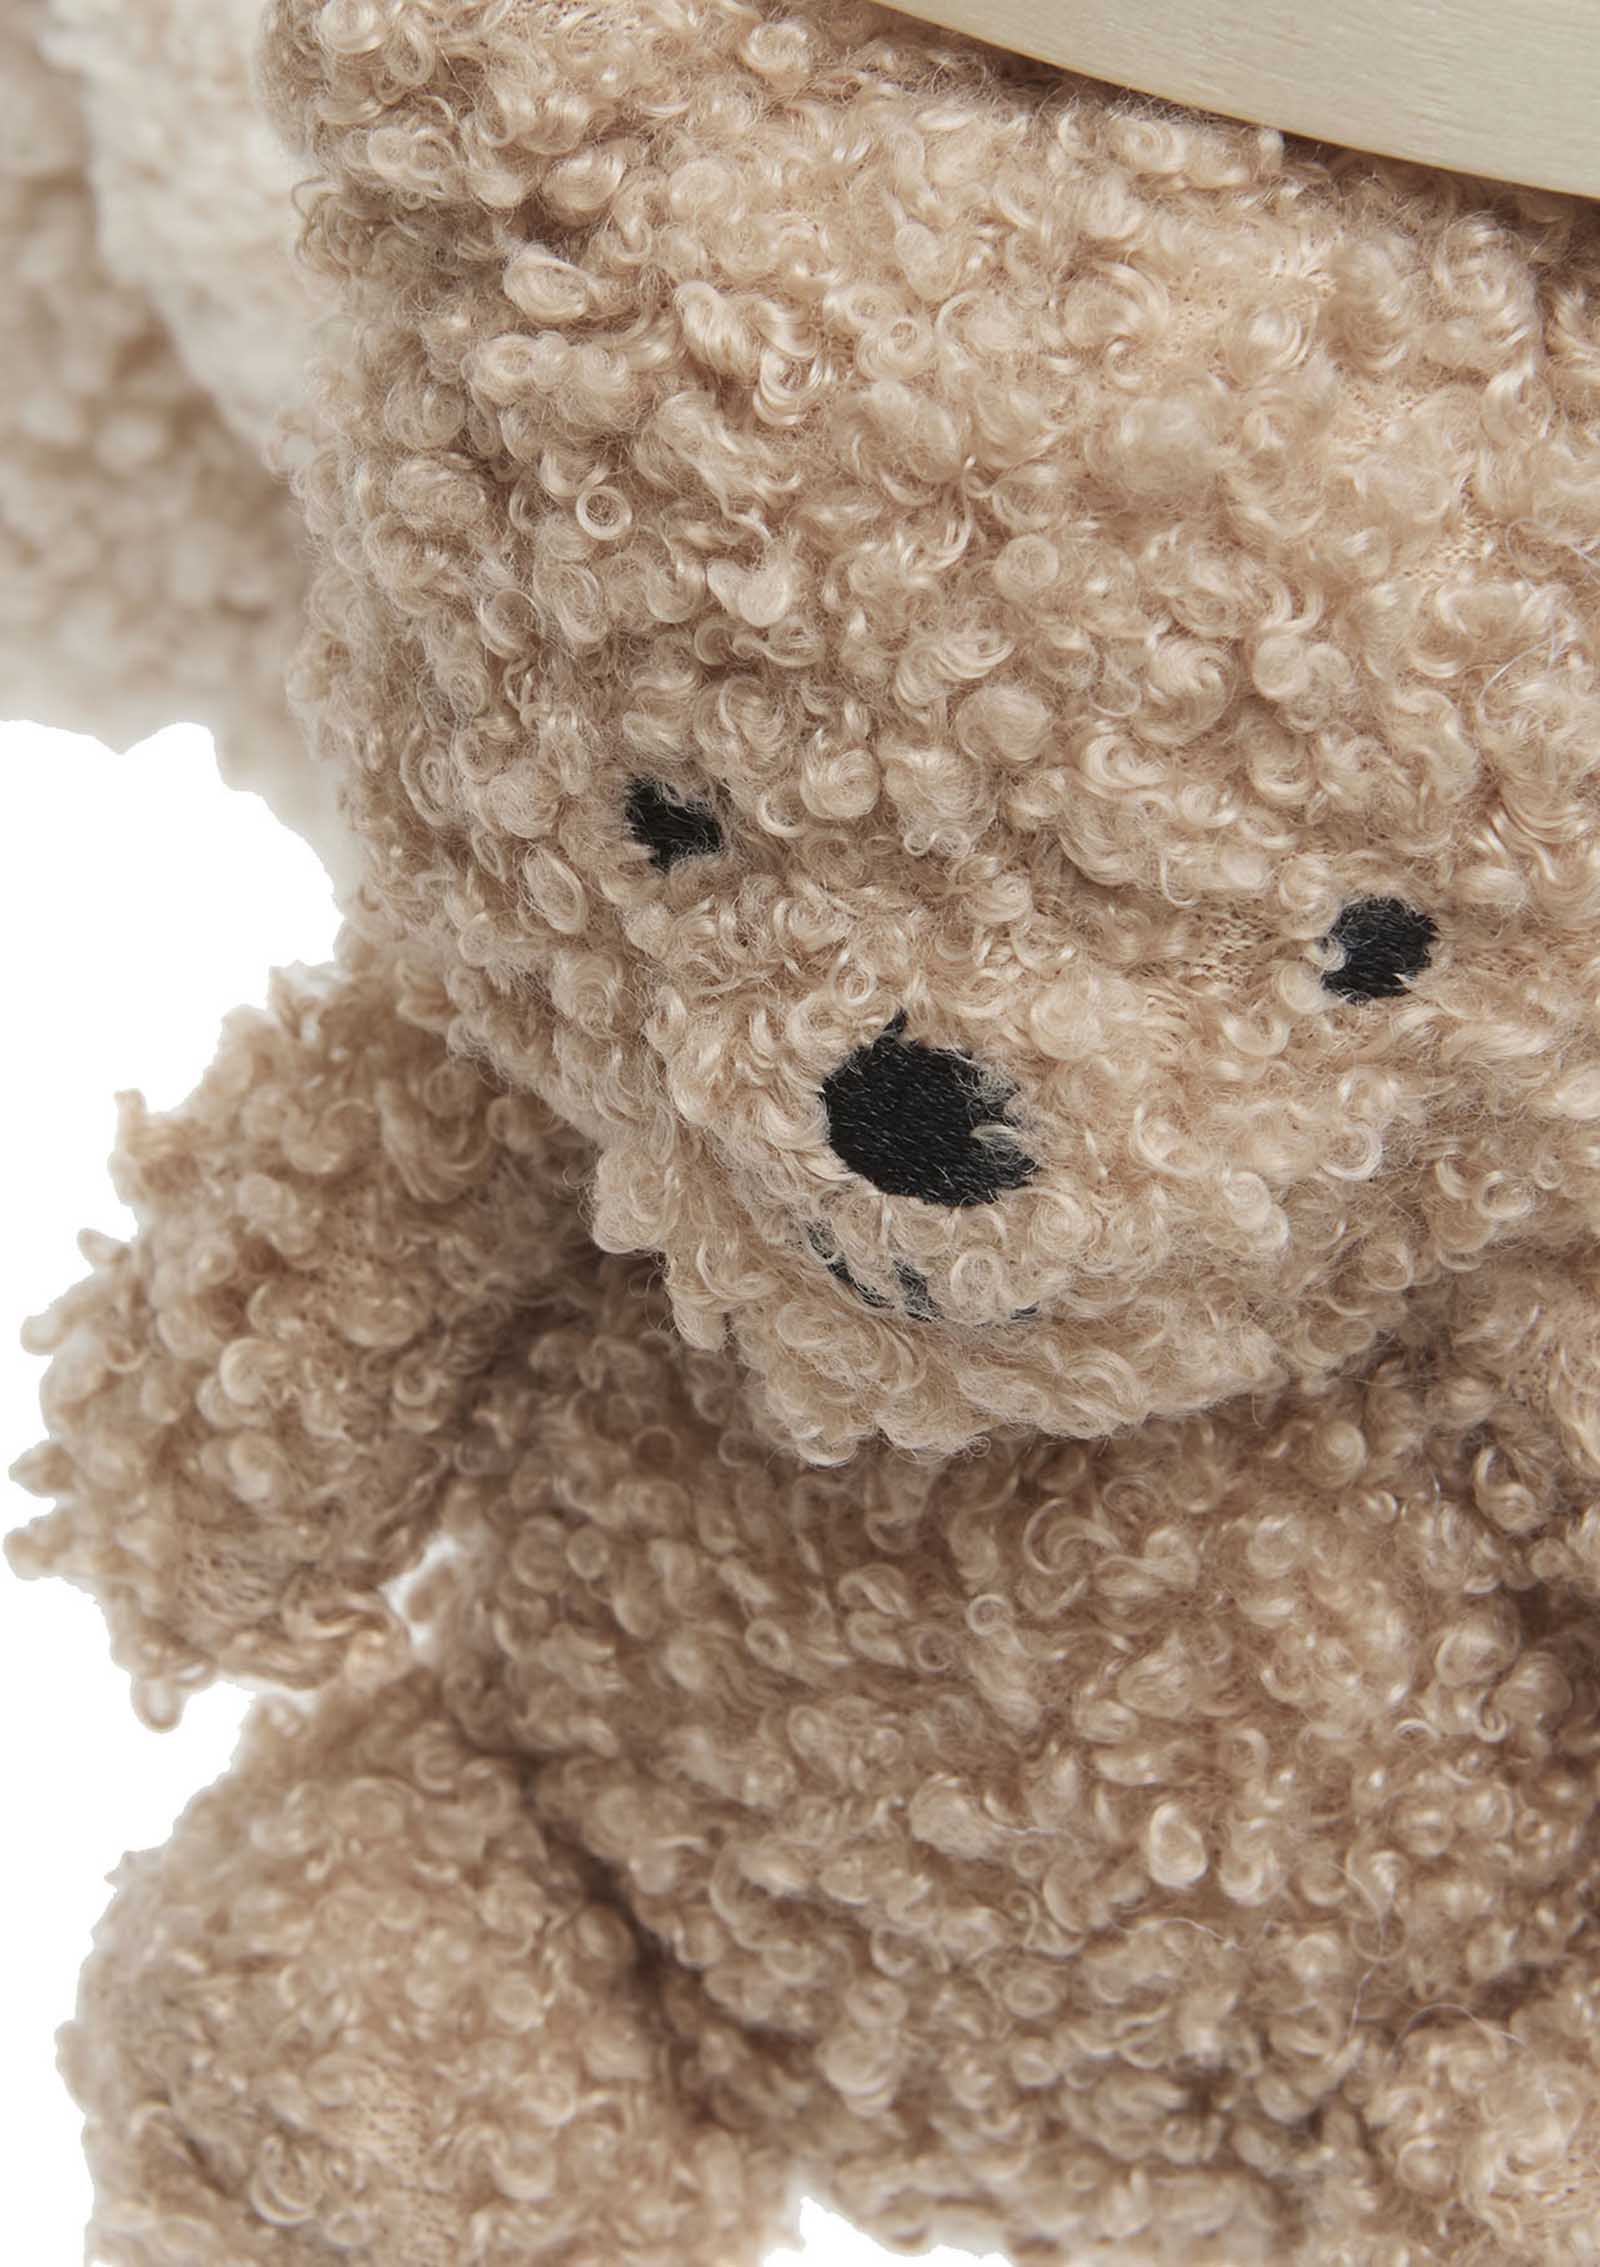 Mobile bébé Teddy Bear - Naturel/Biscuit l Jollein - Judy The Fox